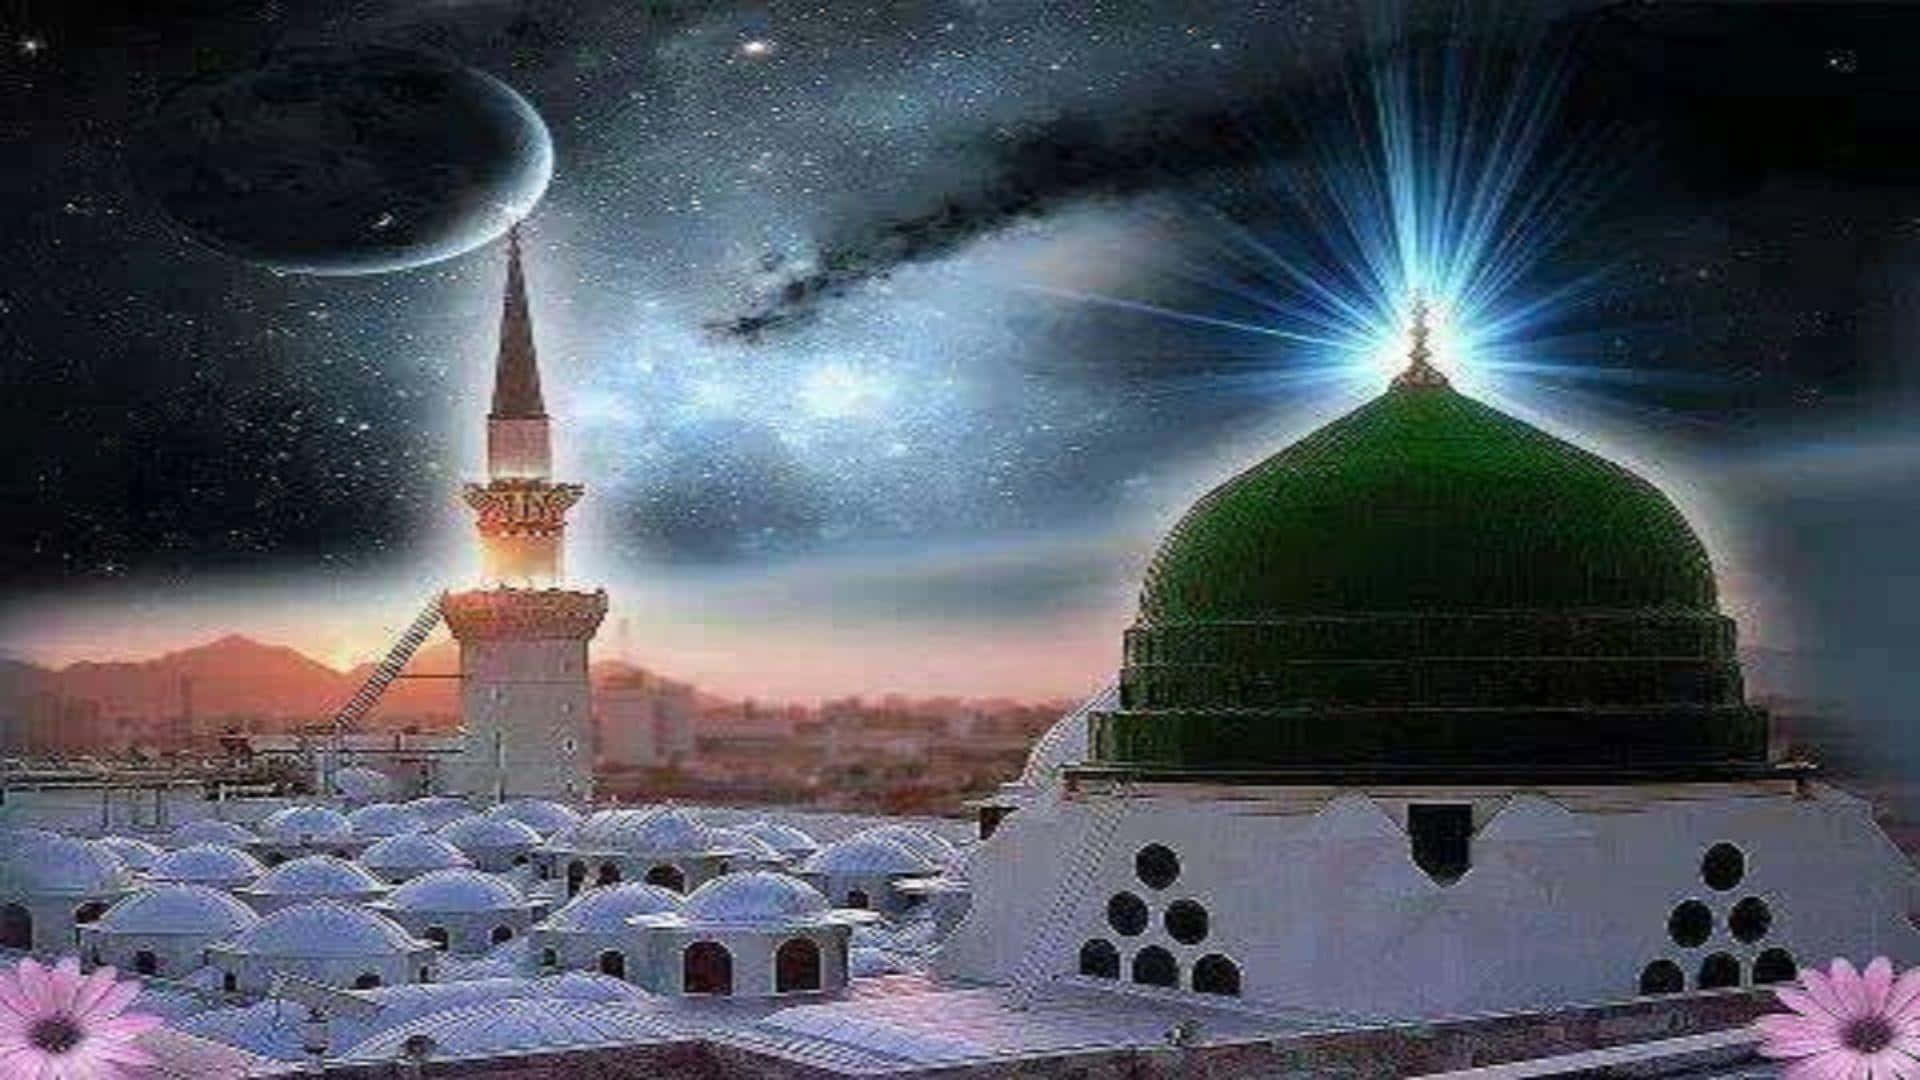 "Beautiful sunrise over the skyline of the holy city of Medina, Saudi Arabia"